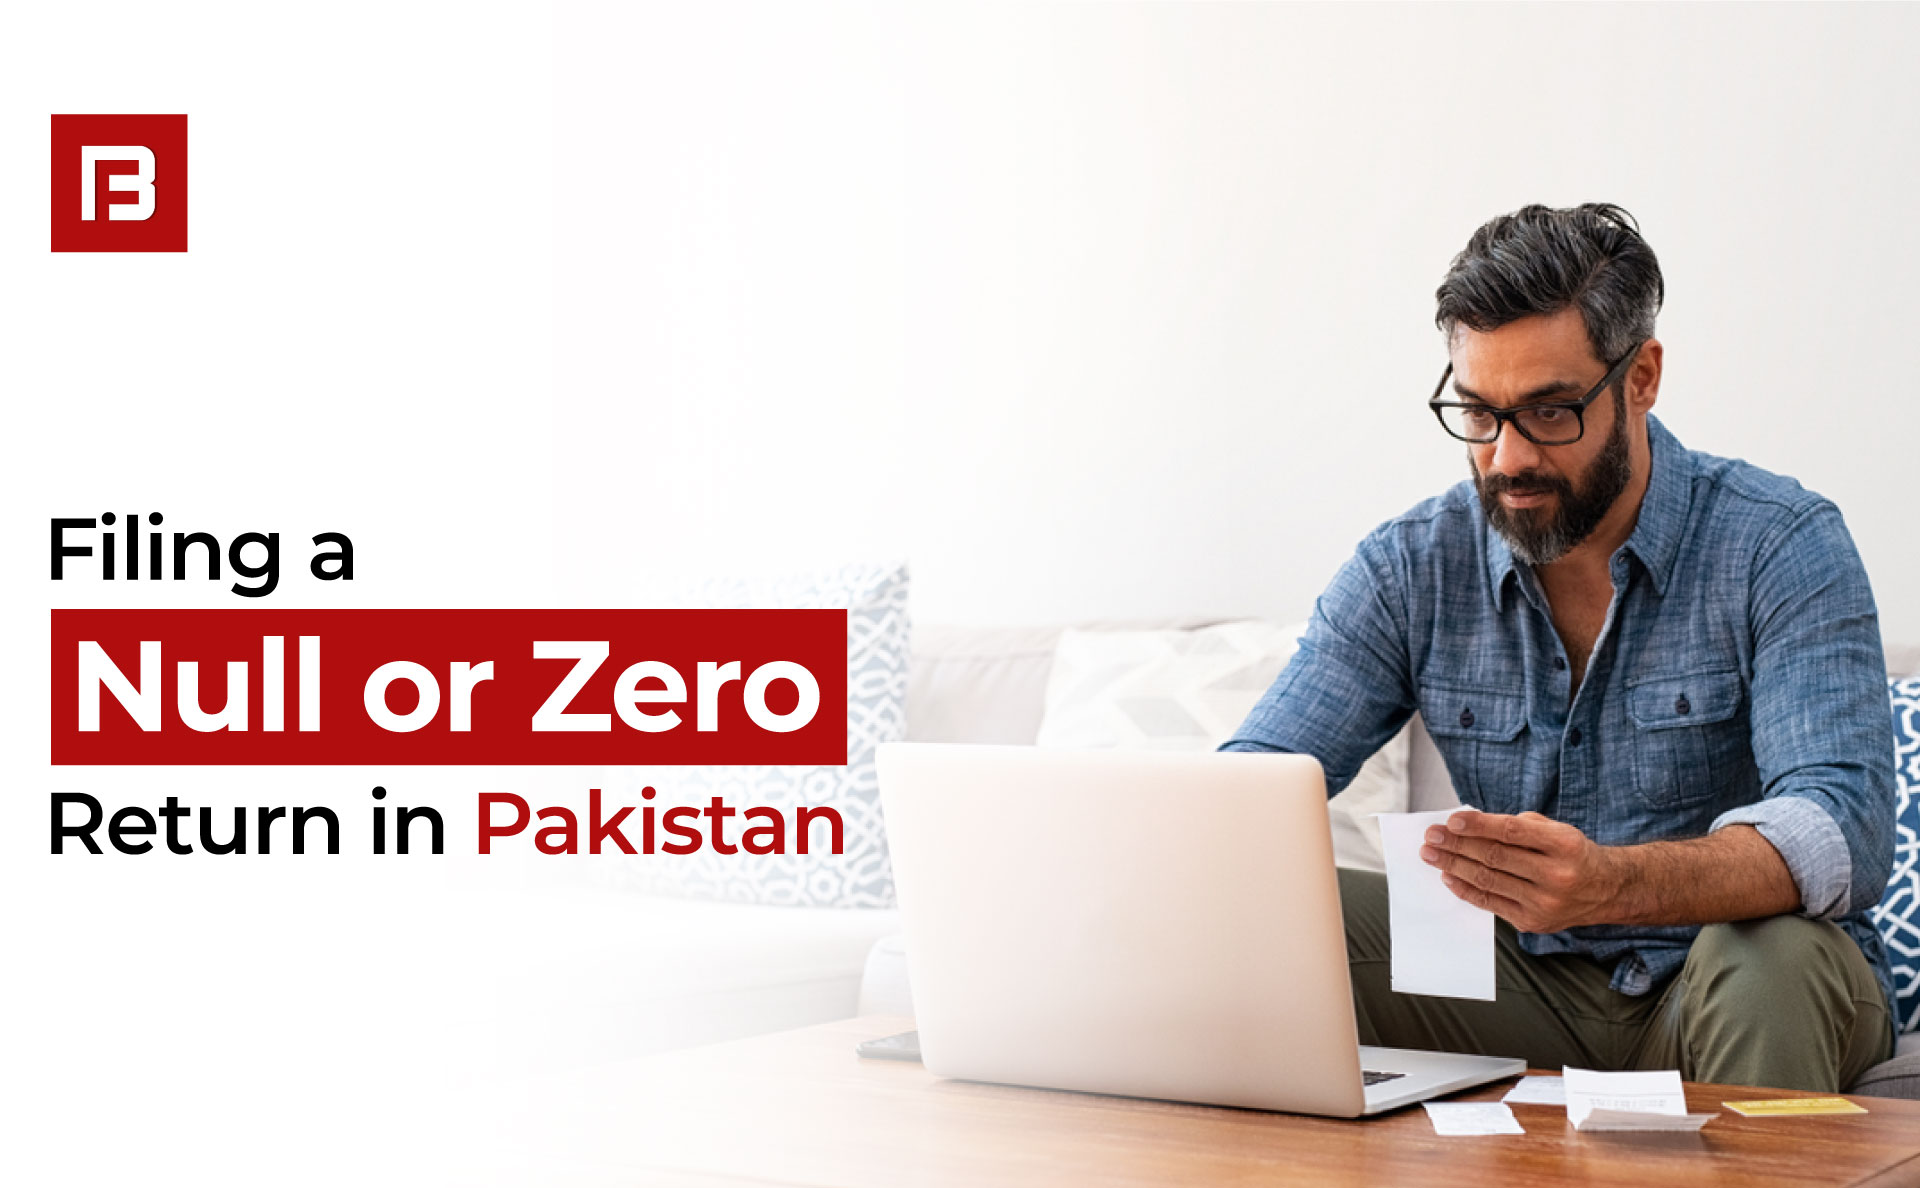 Filing a Null or Zero Return in Pakistan